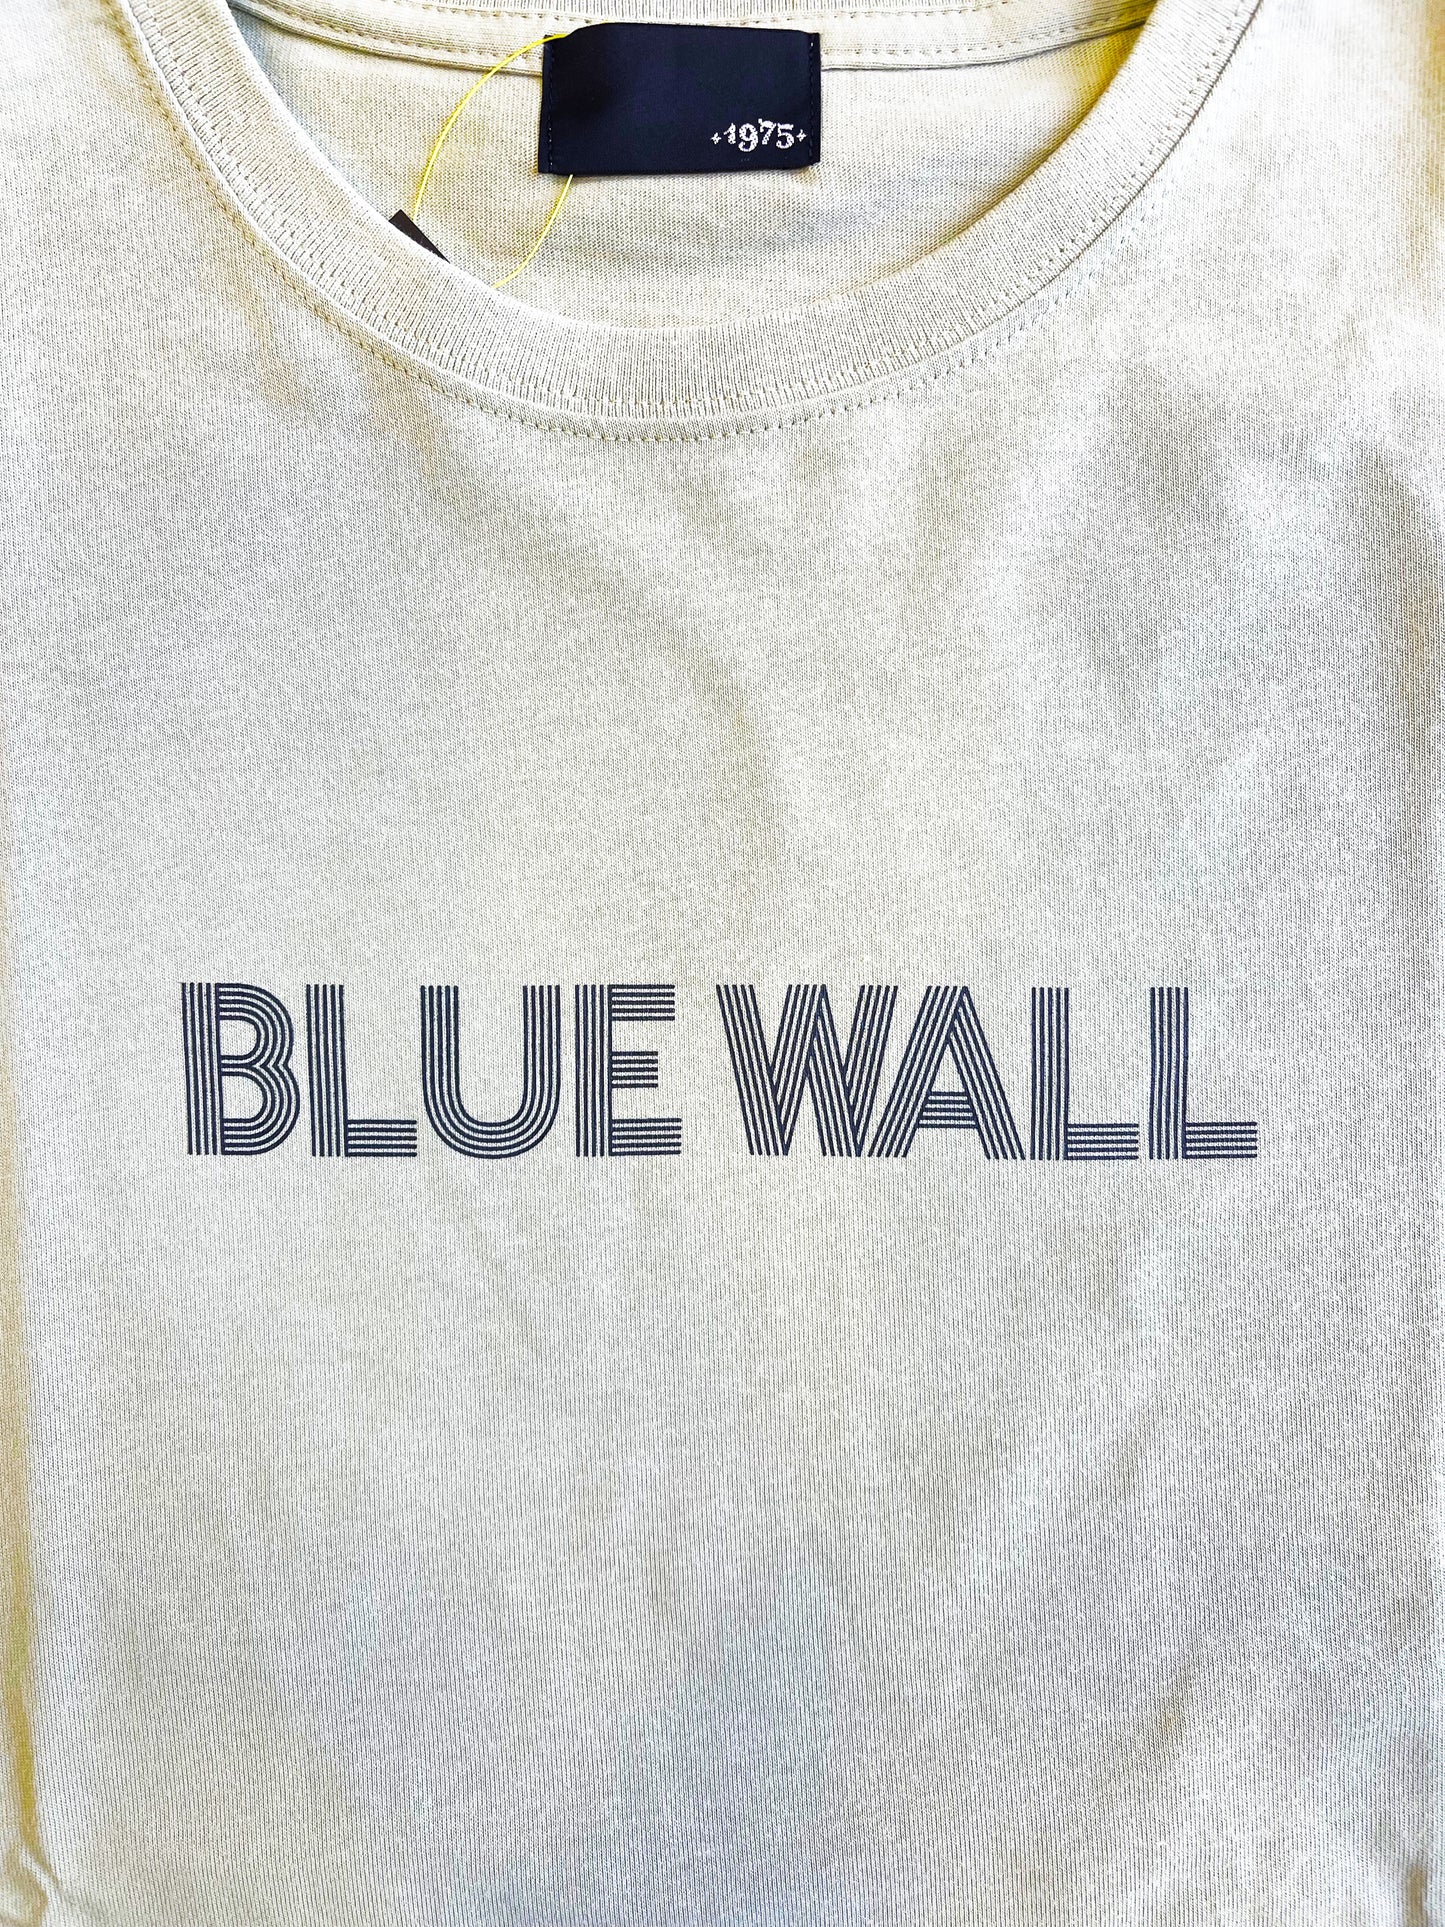 【NEW】BLUE WALL TEE